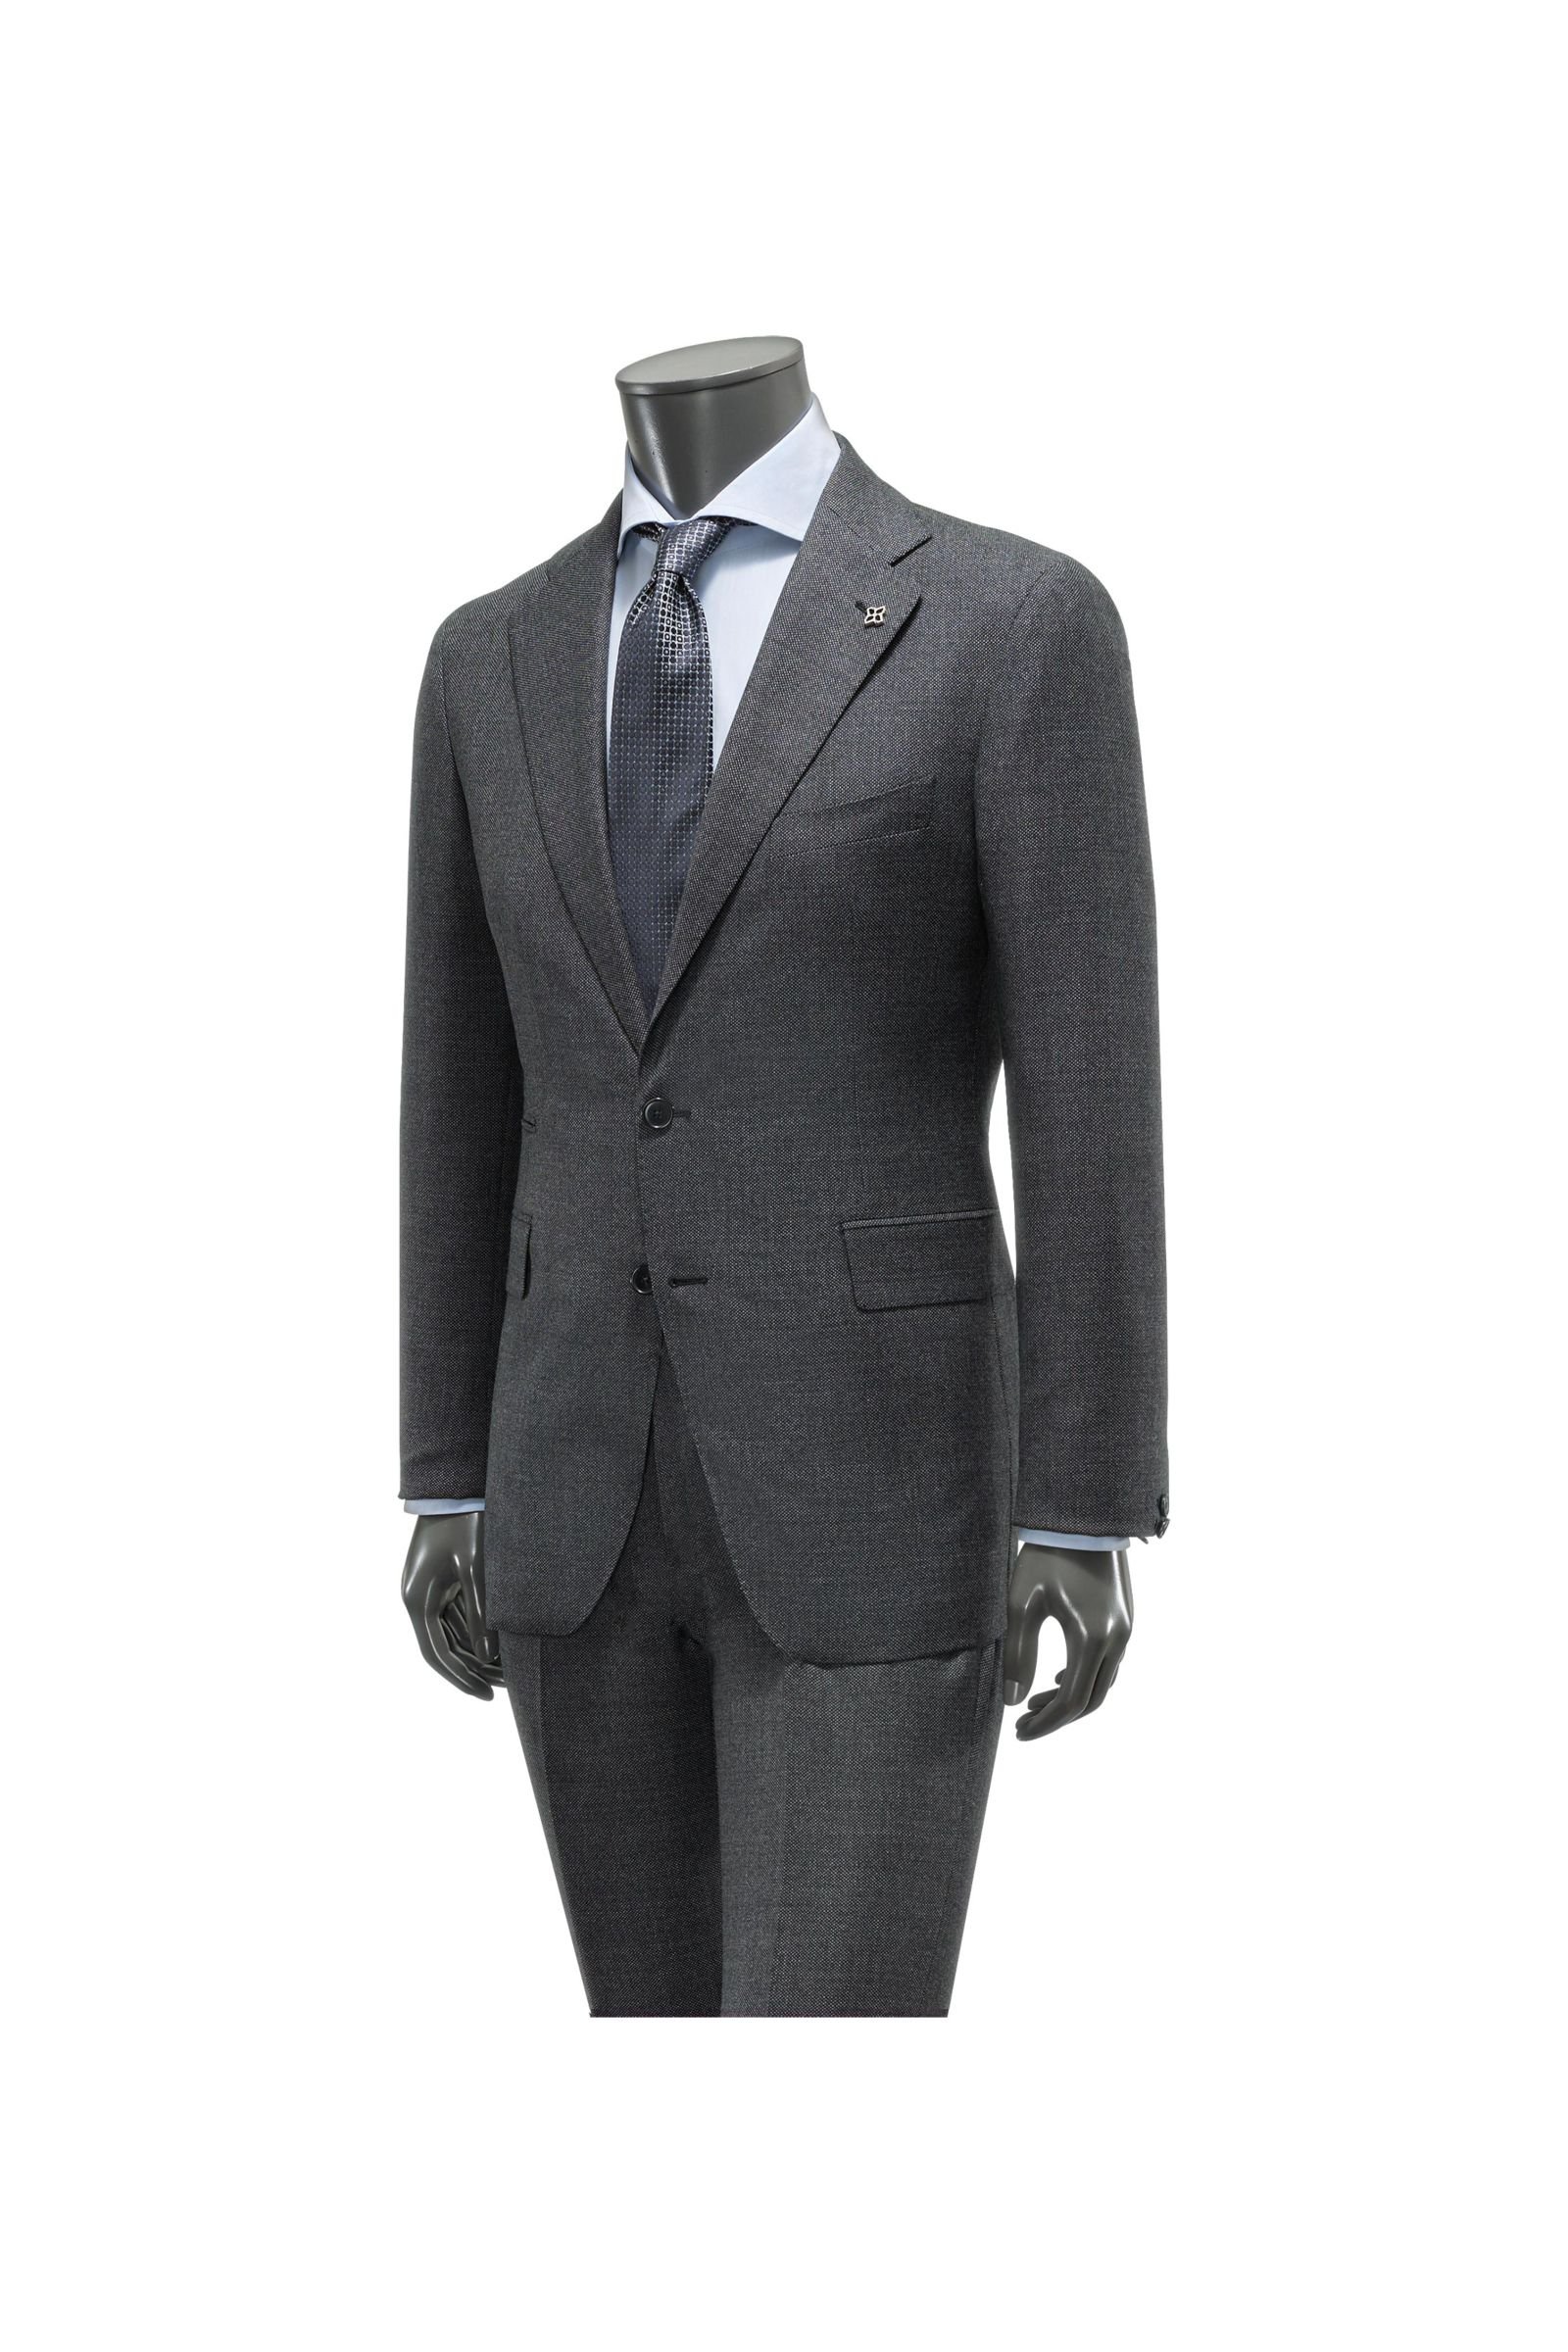 Suit grey patterned